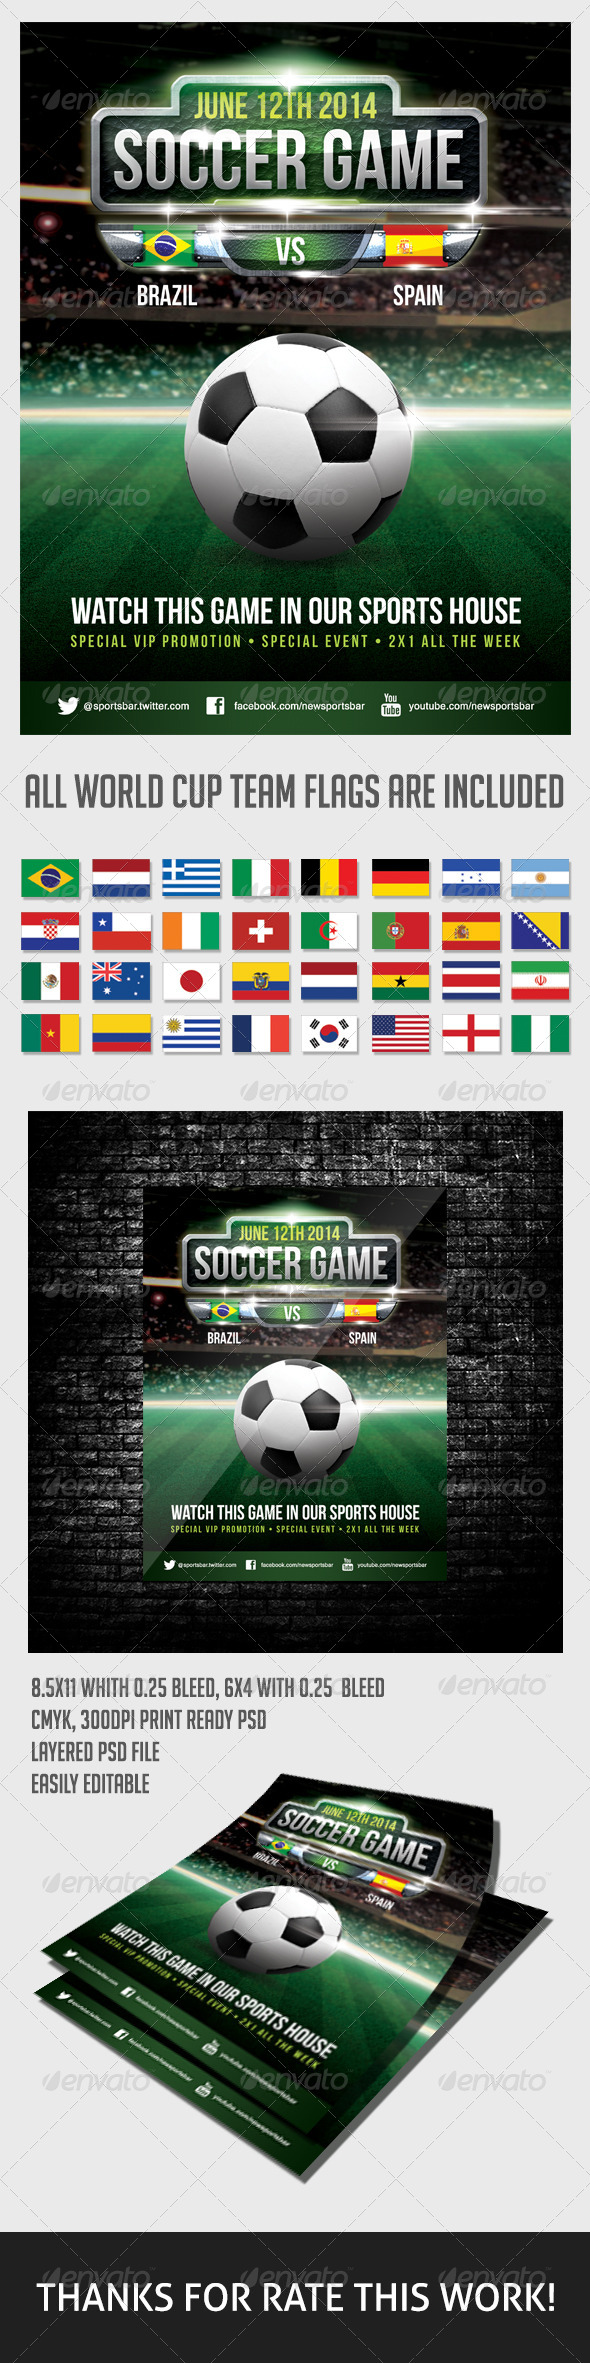 Soccer Game Poster